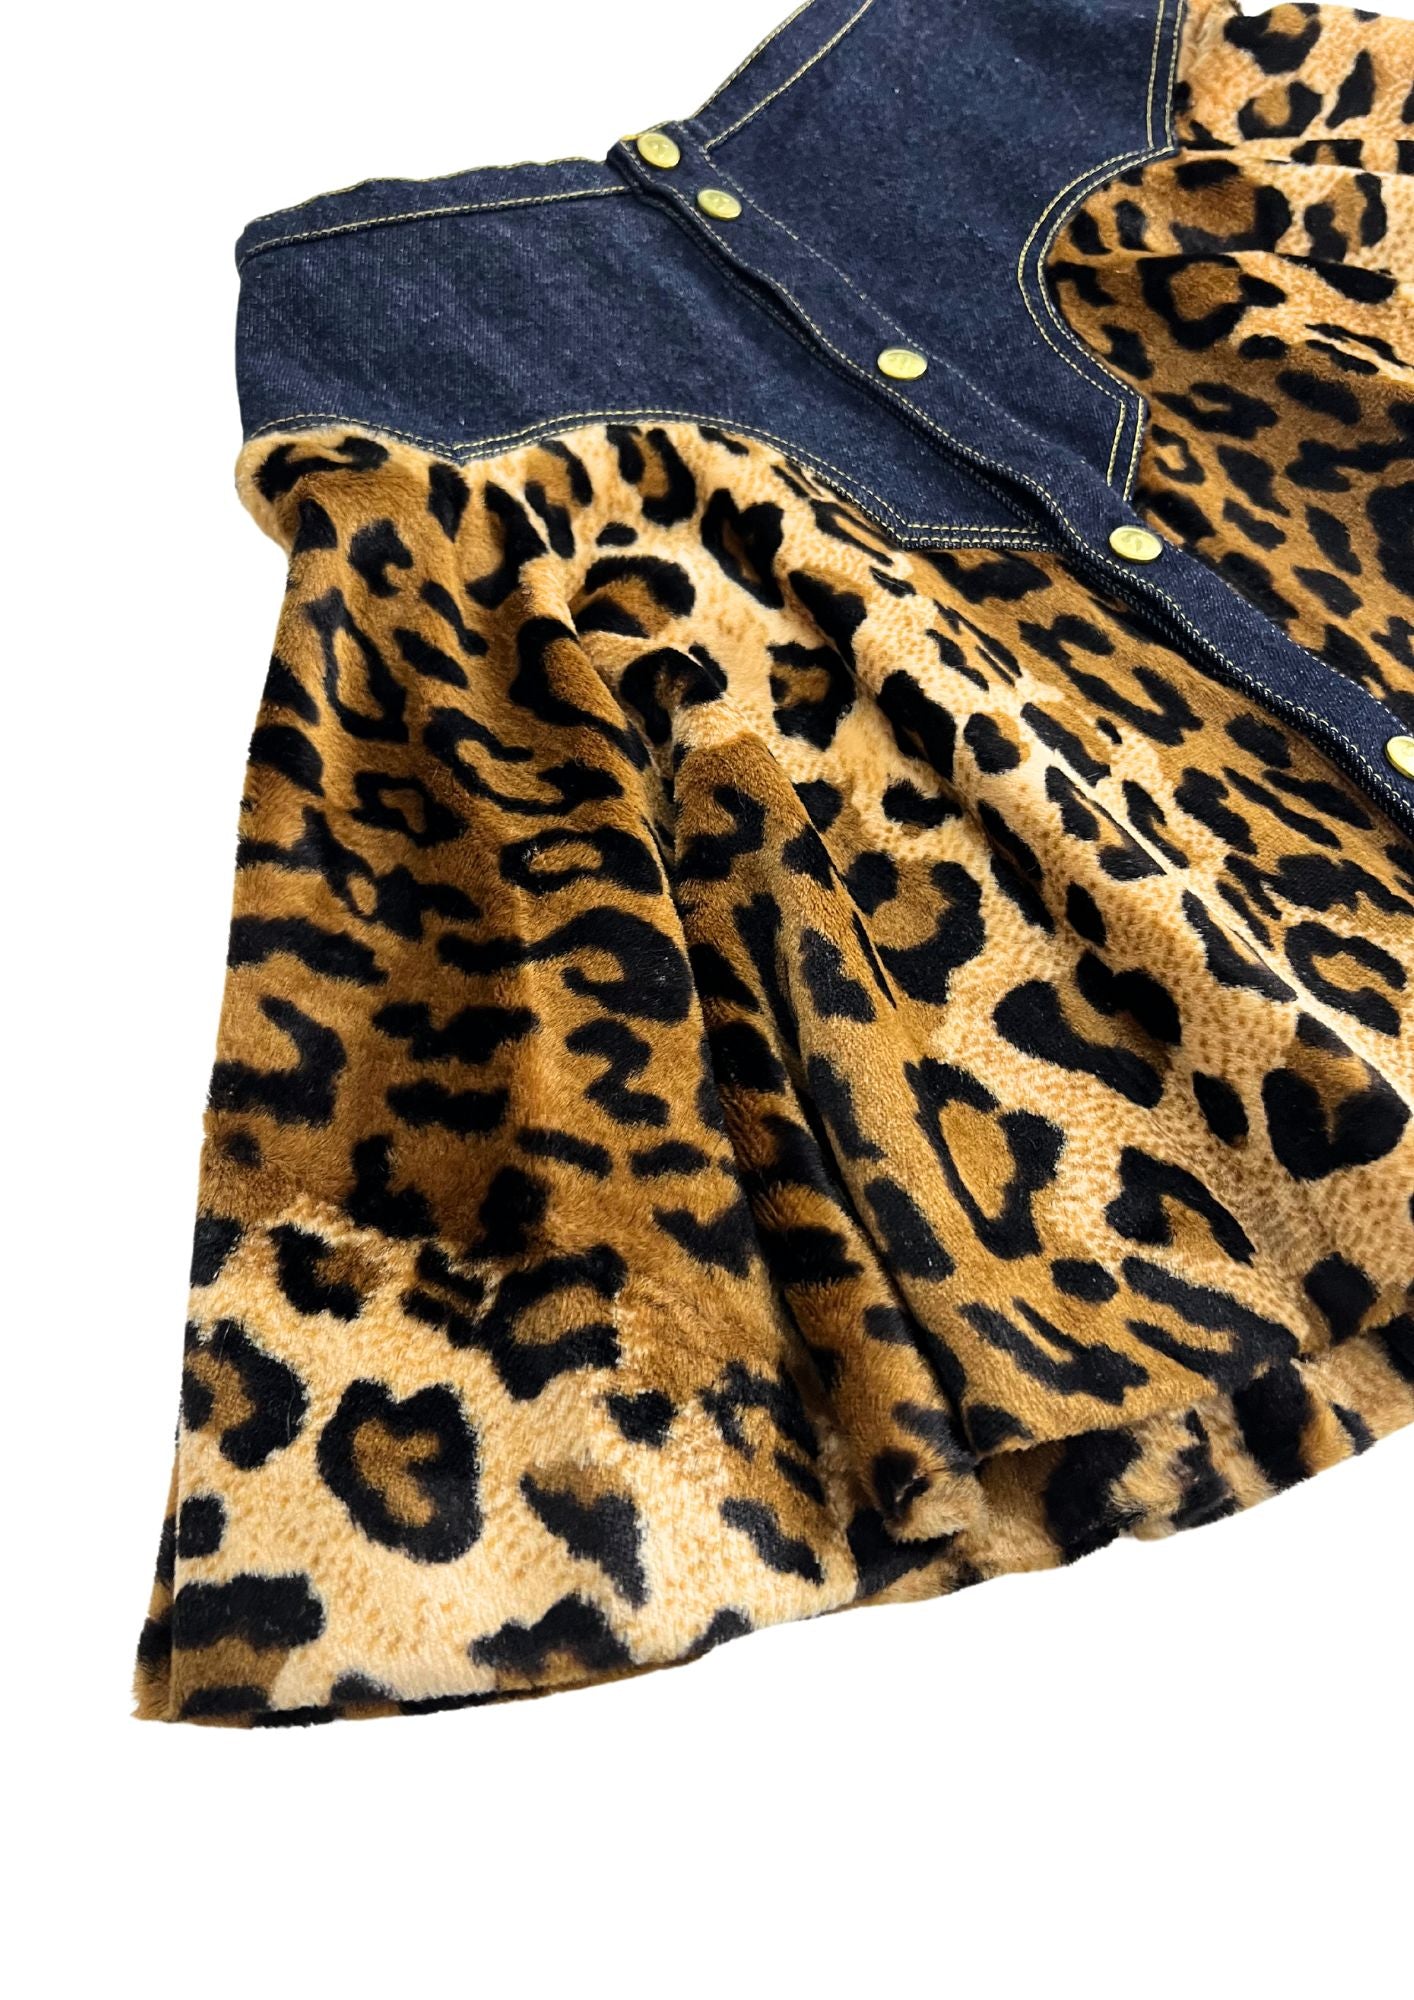 90s Hysteric Glamour Leopard Denim Skirt and Jacket Setup